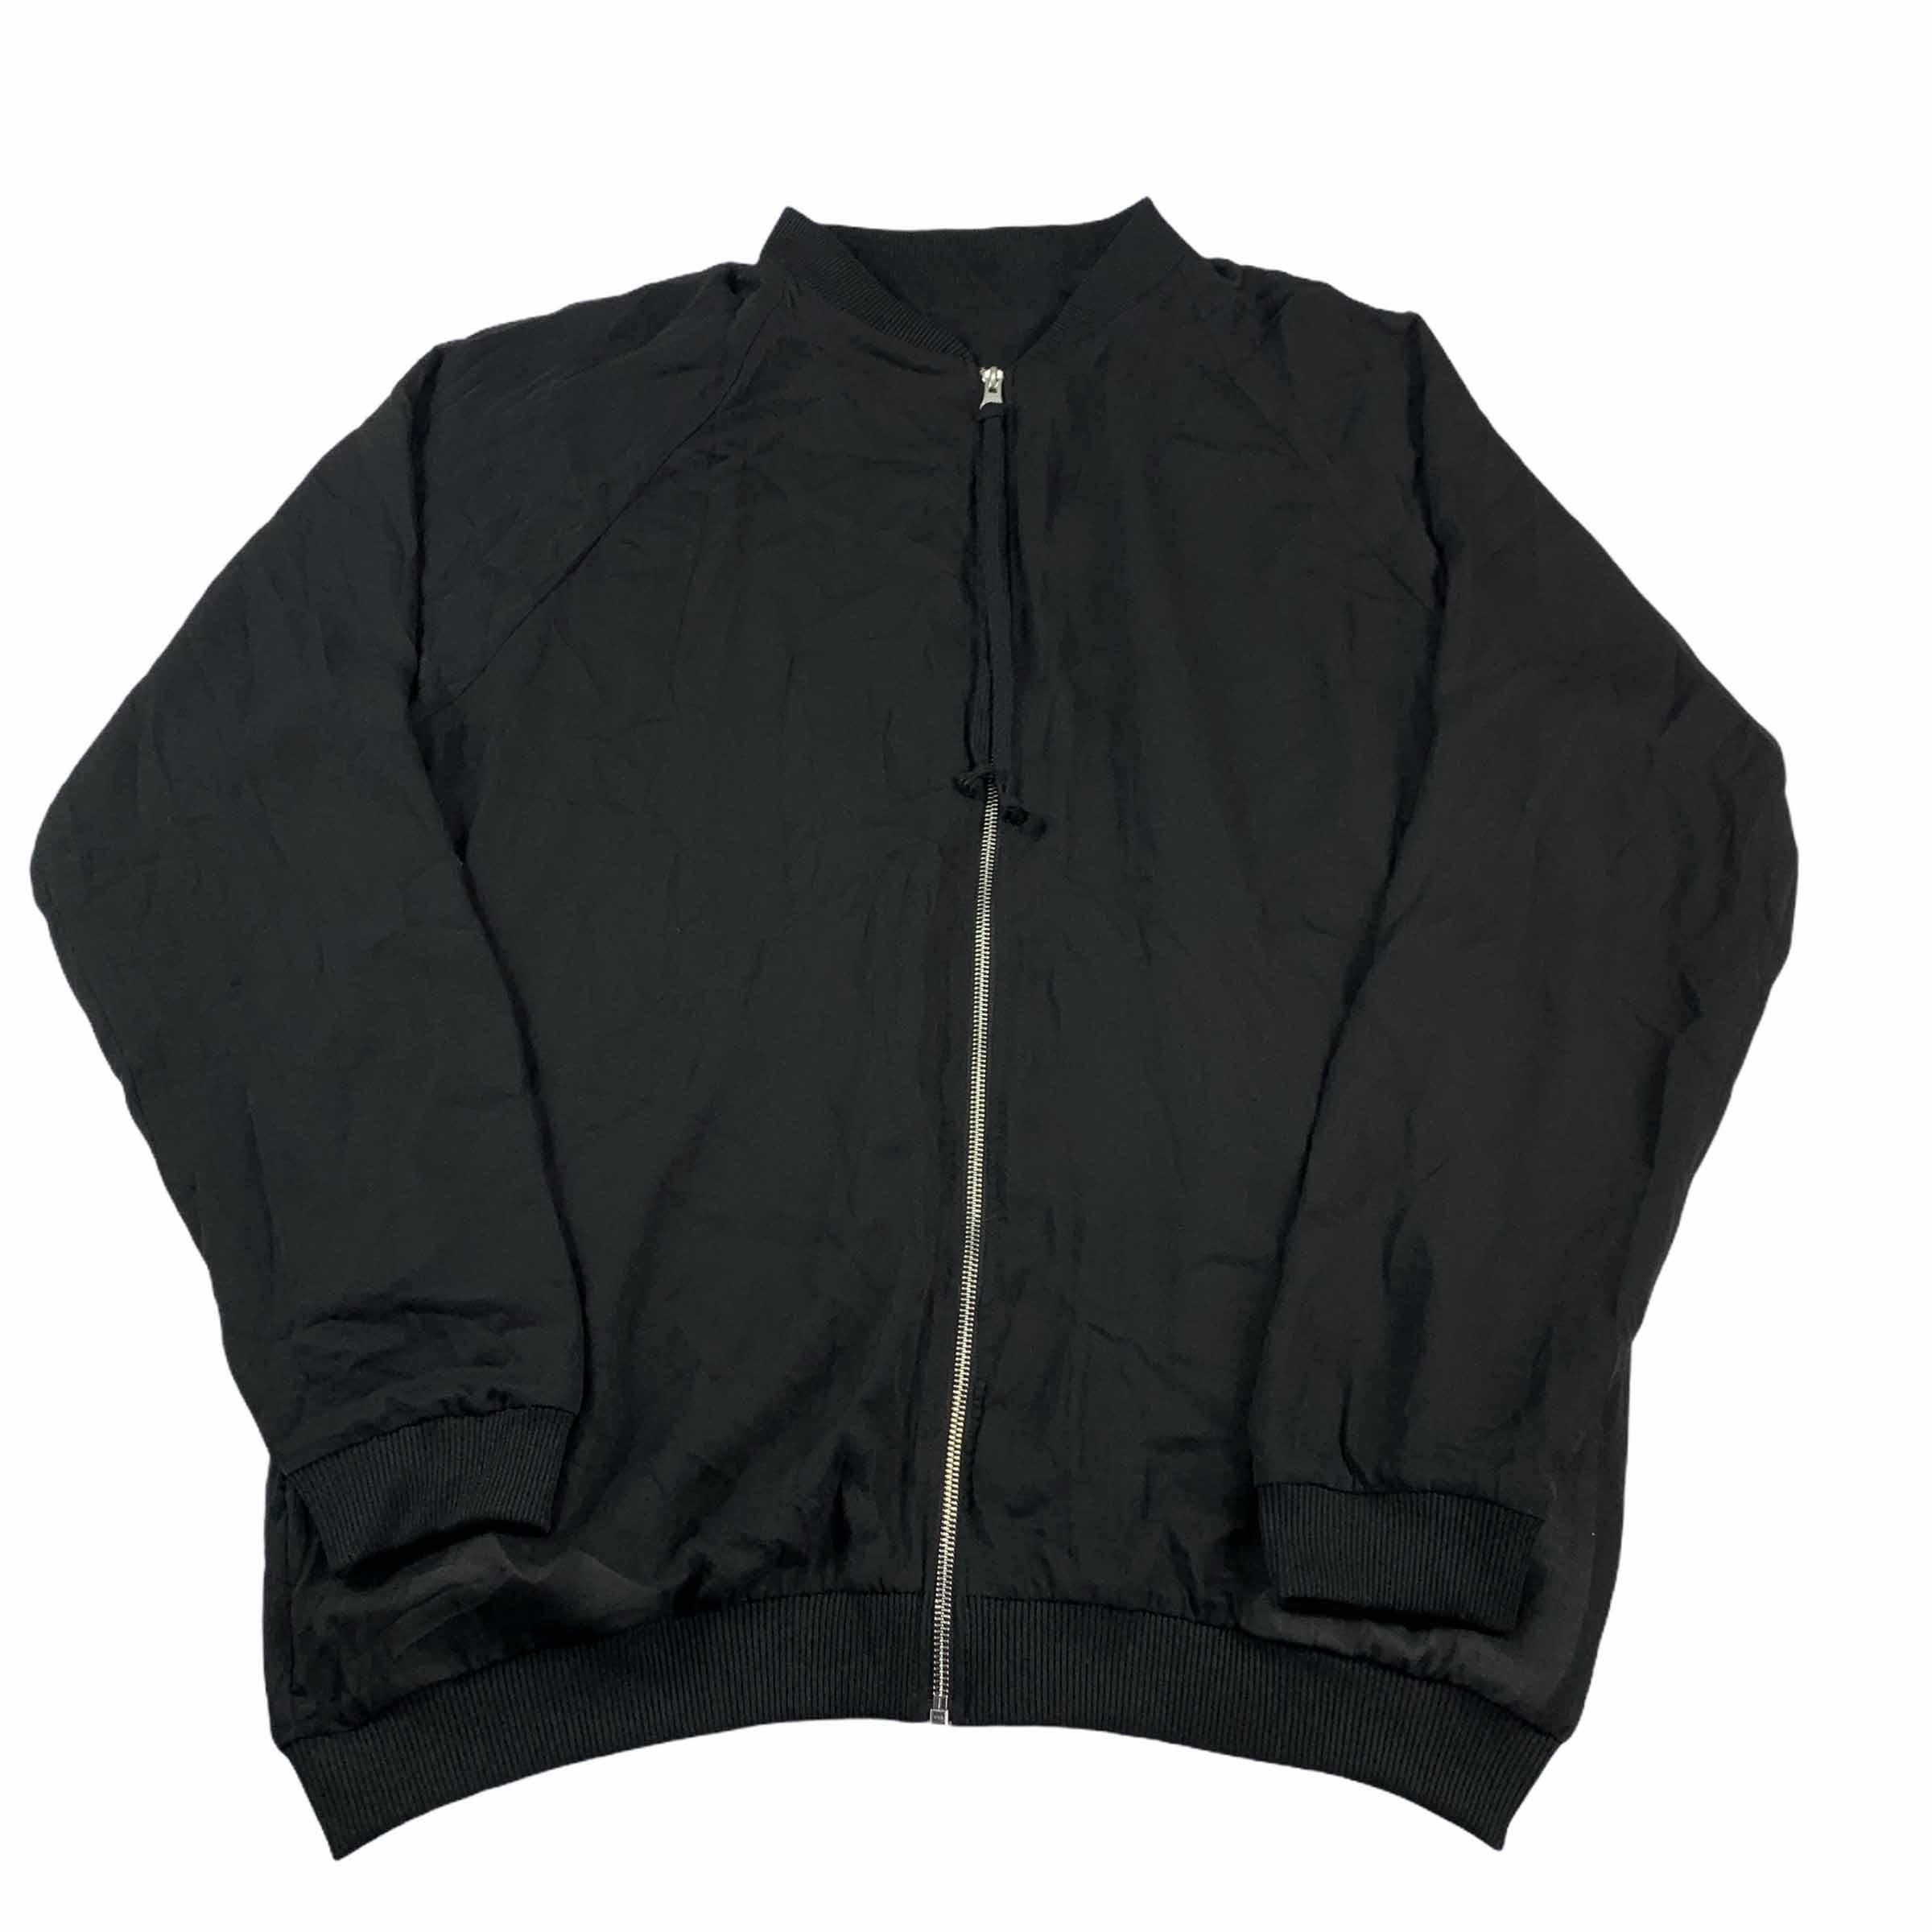 [Loolapalooza] Chiffon Zip-up Jacket - Size S